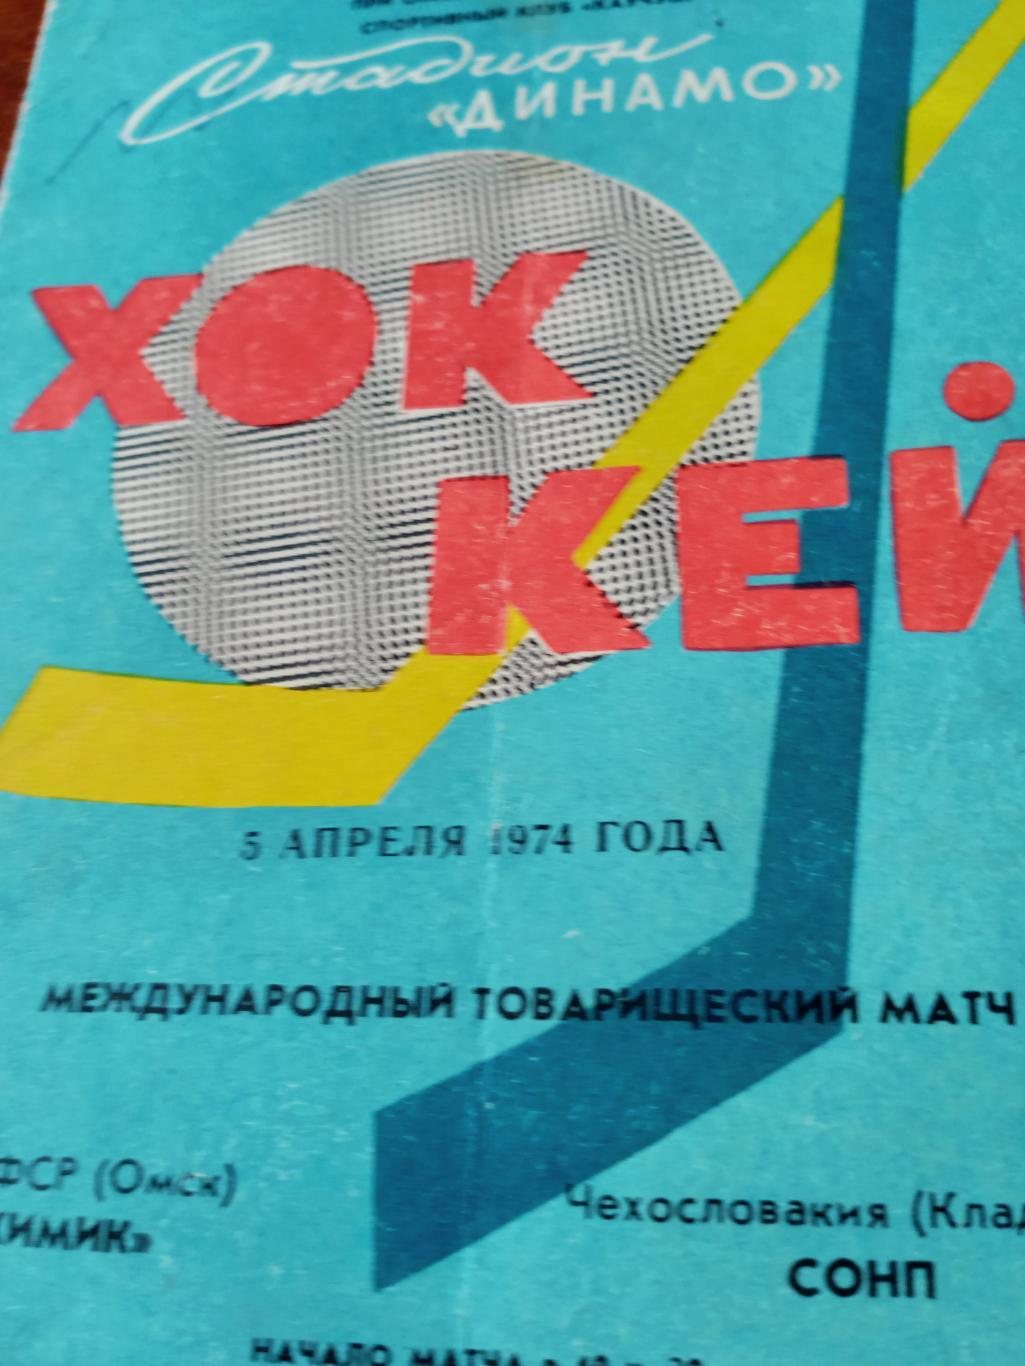 Химик Омск - СОНП Кладно. 5 апреля 1974 год